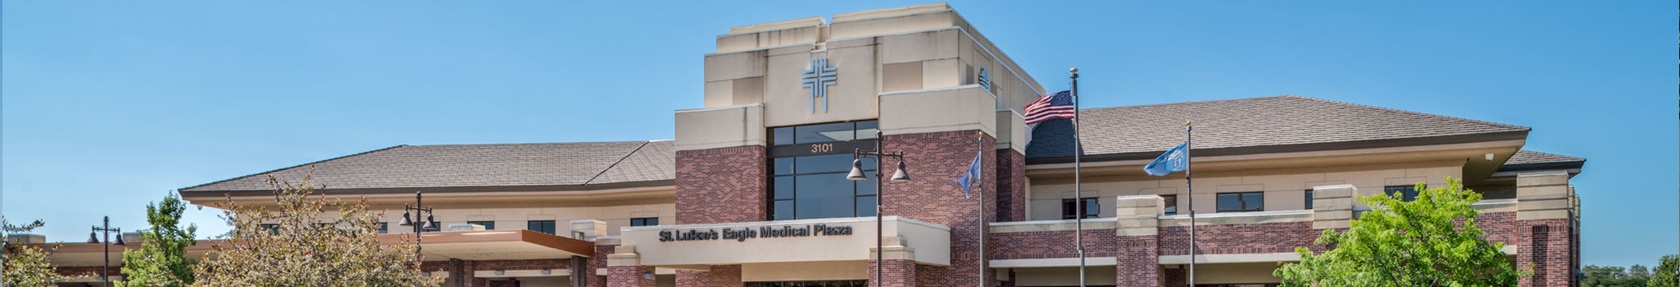 St. Luke's Eagle Medical Plaza